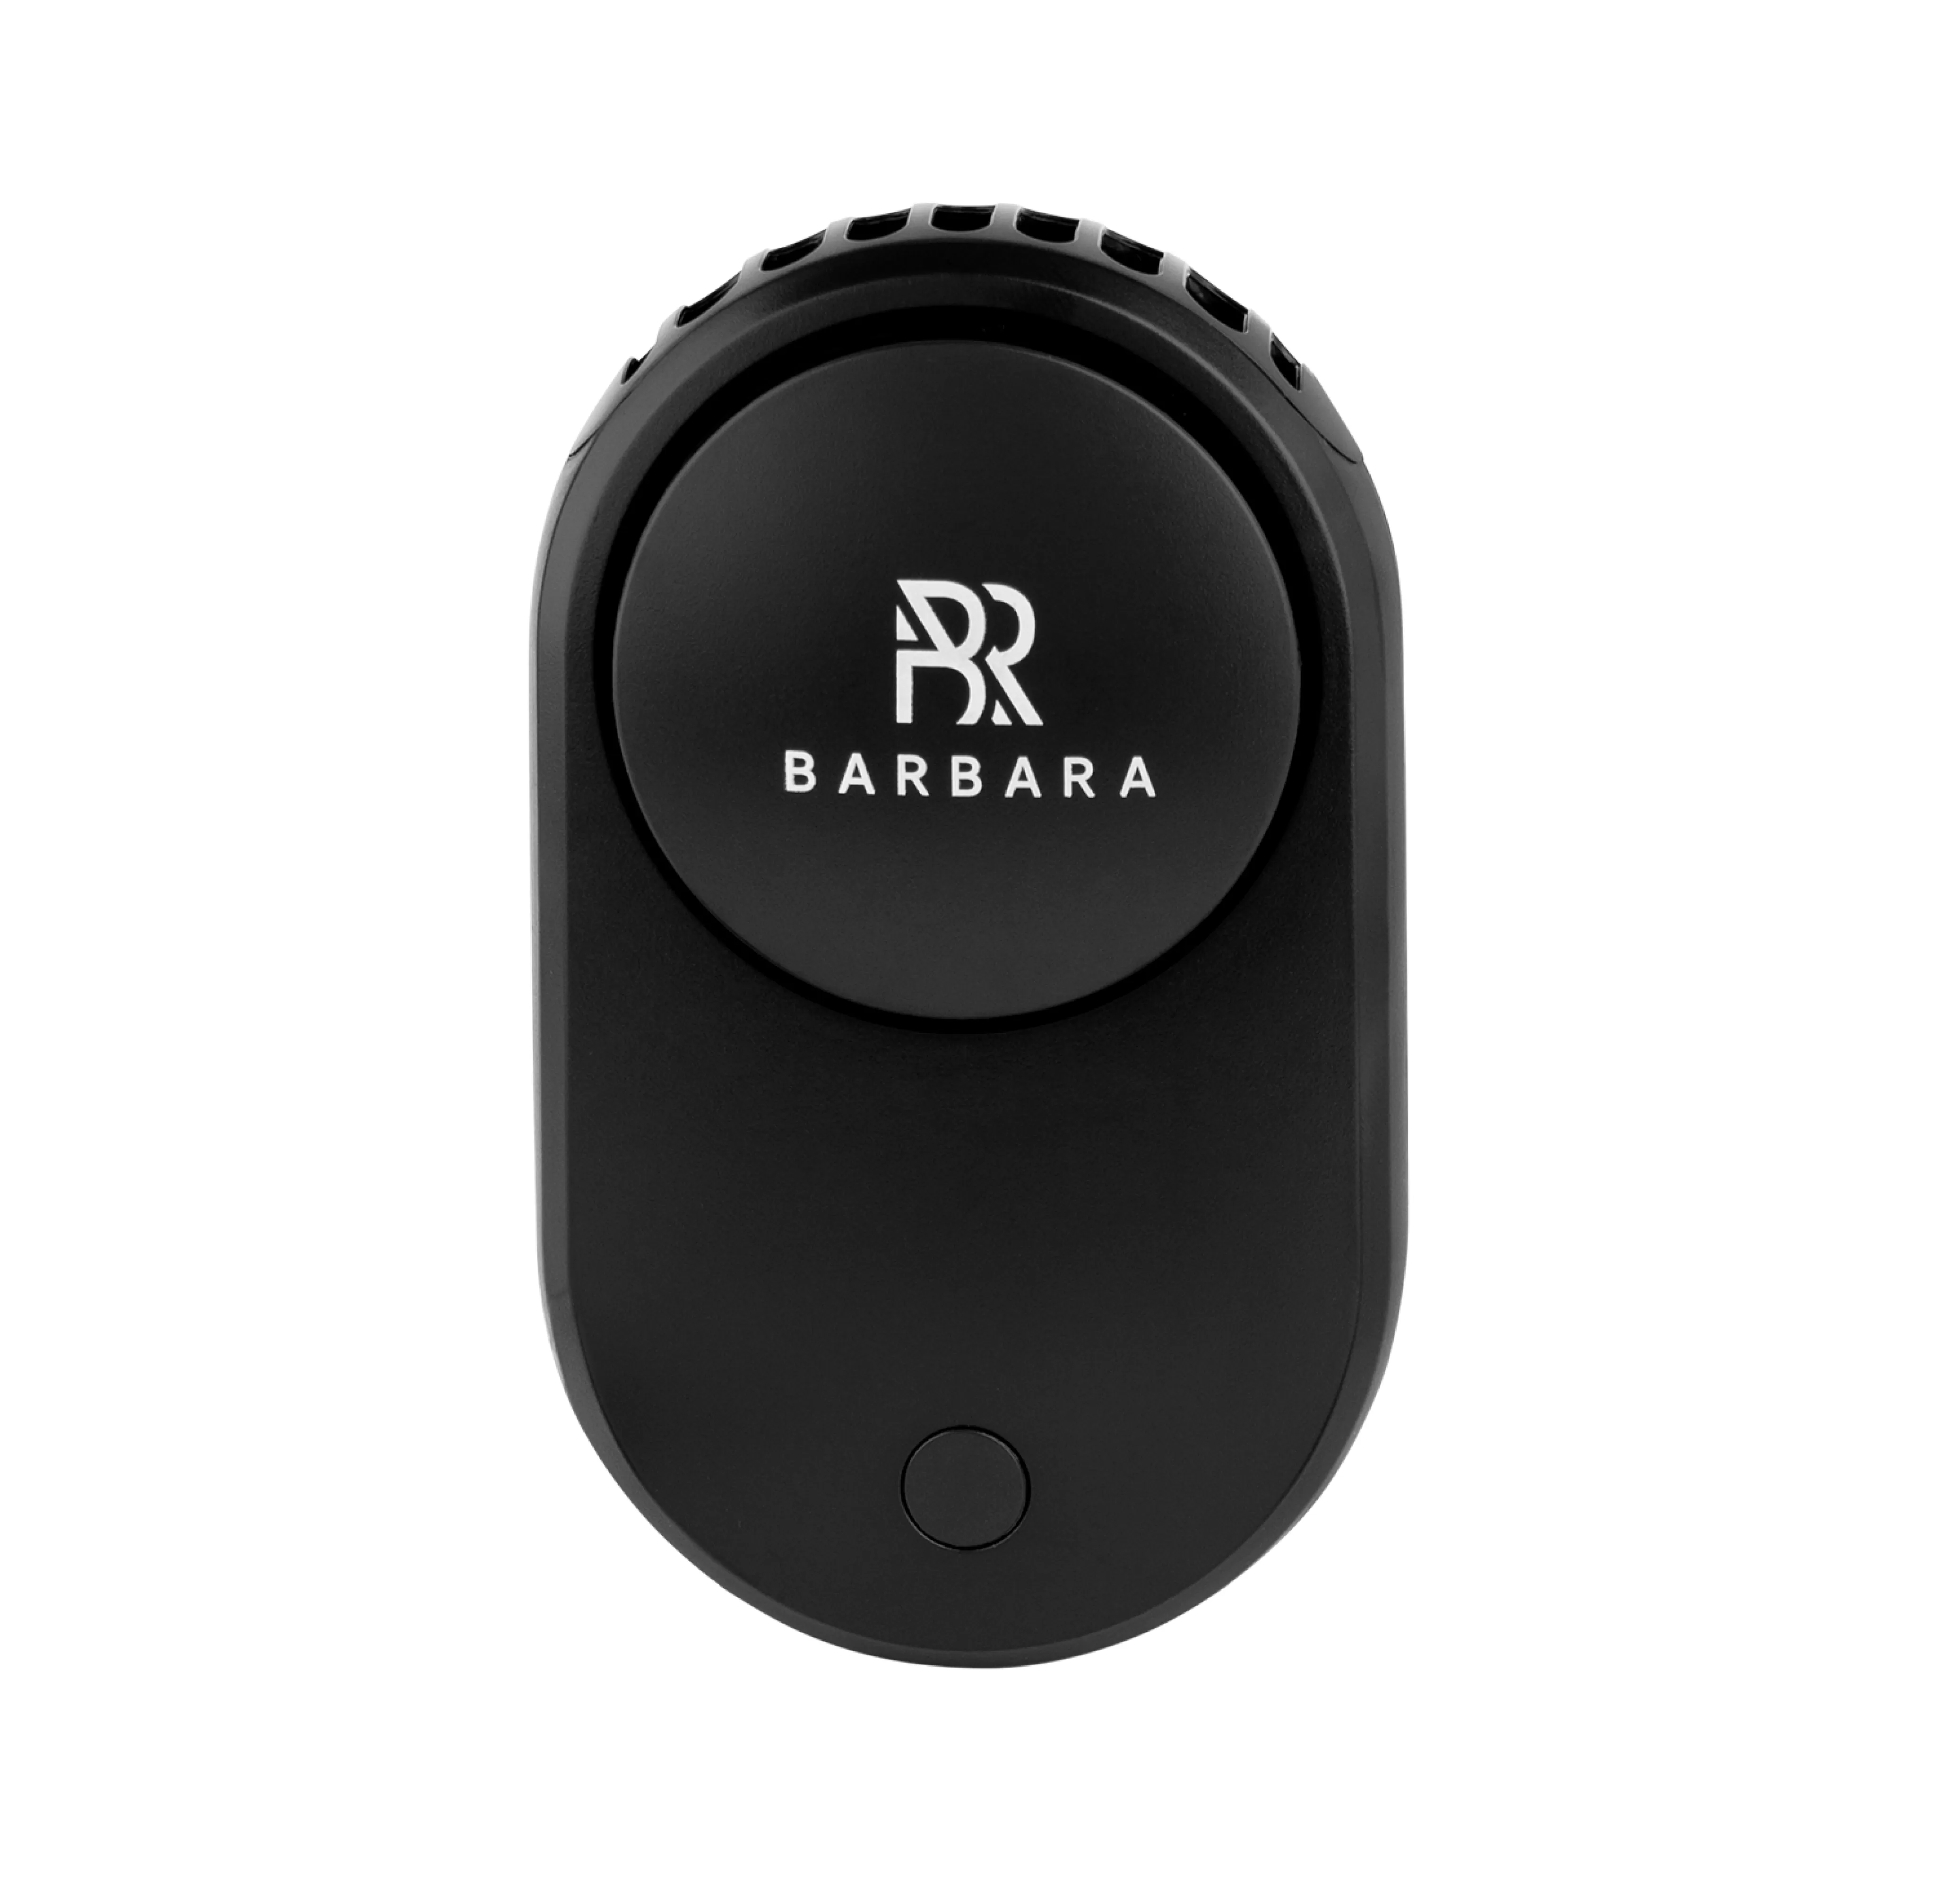 Вентилятор для сушки ресниц Barbara, USB, черный